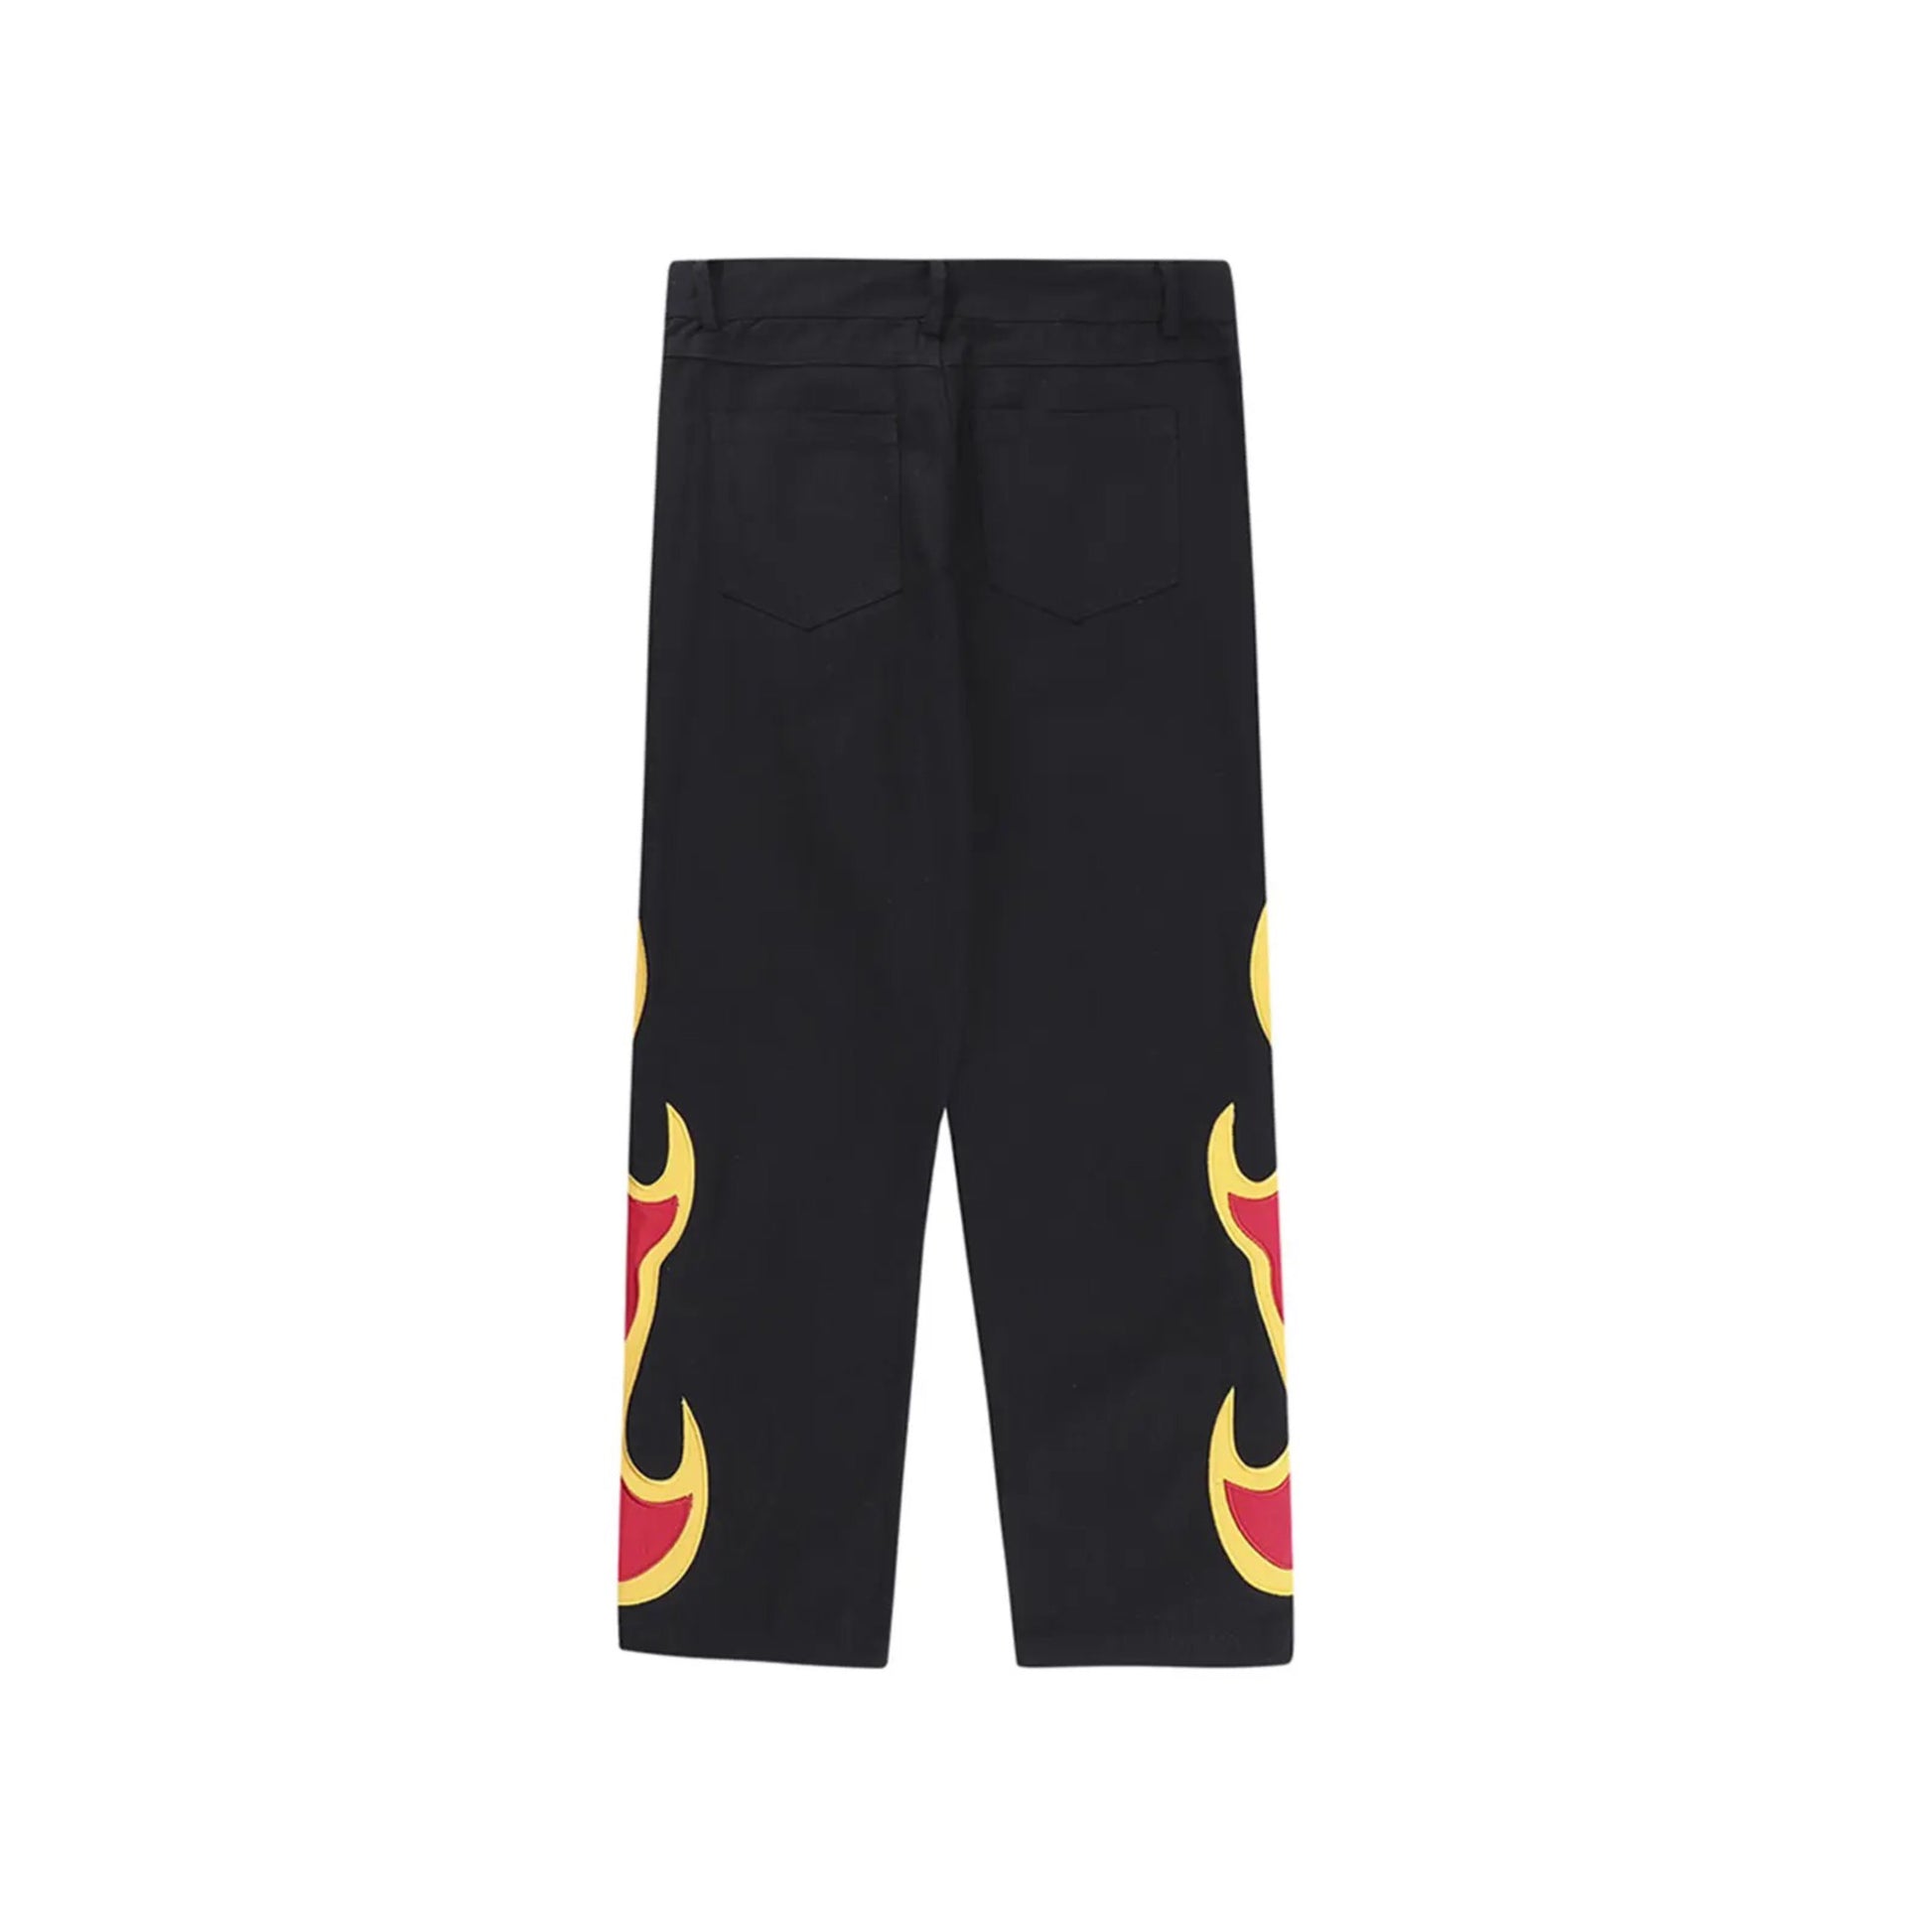 Fire Flame Sweatpants